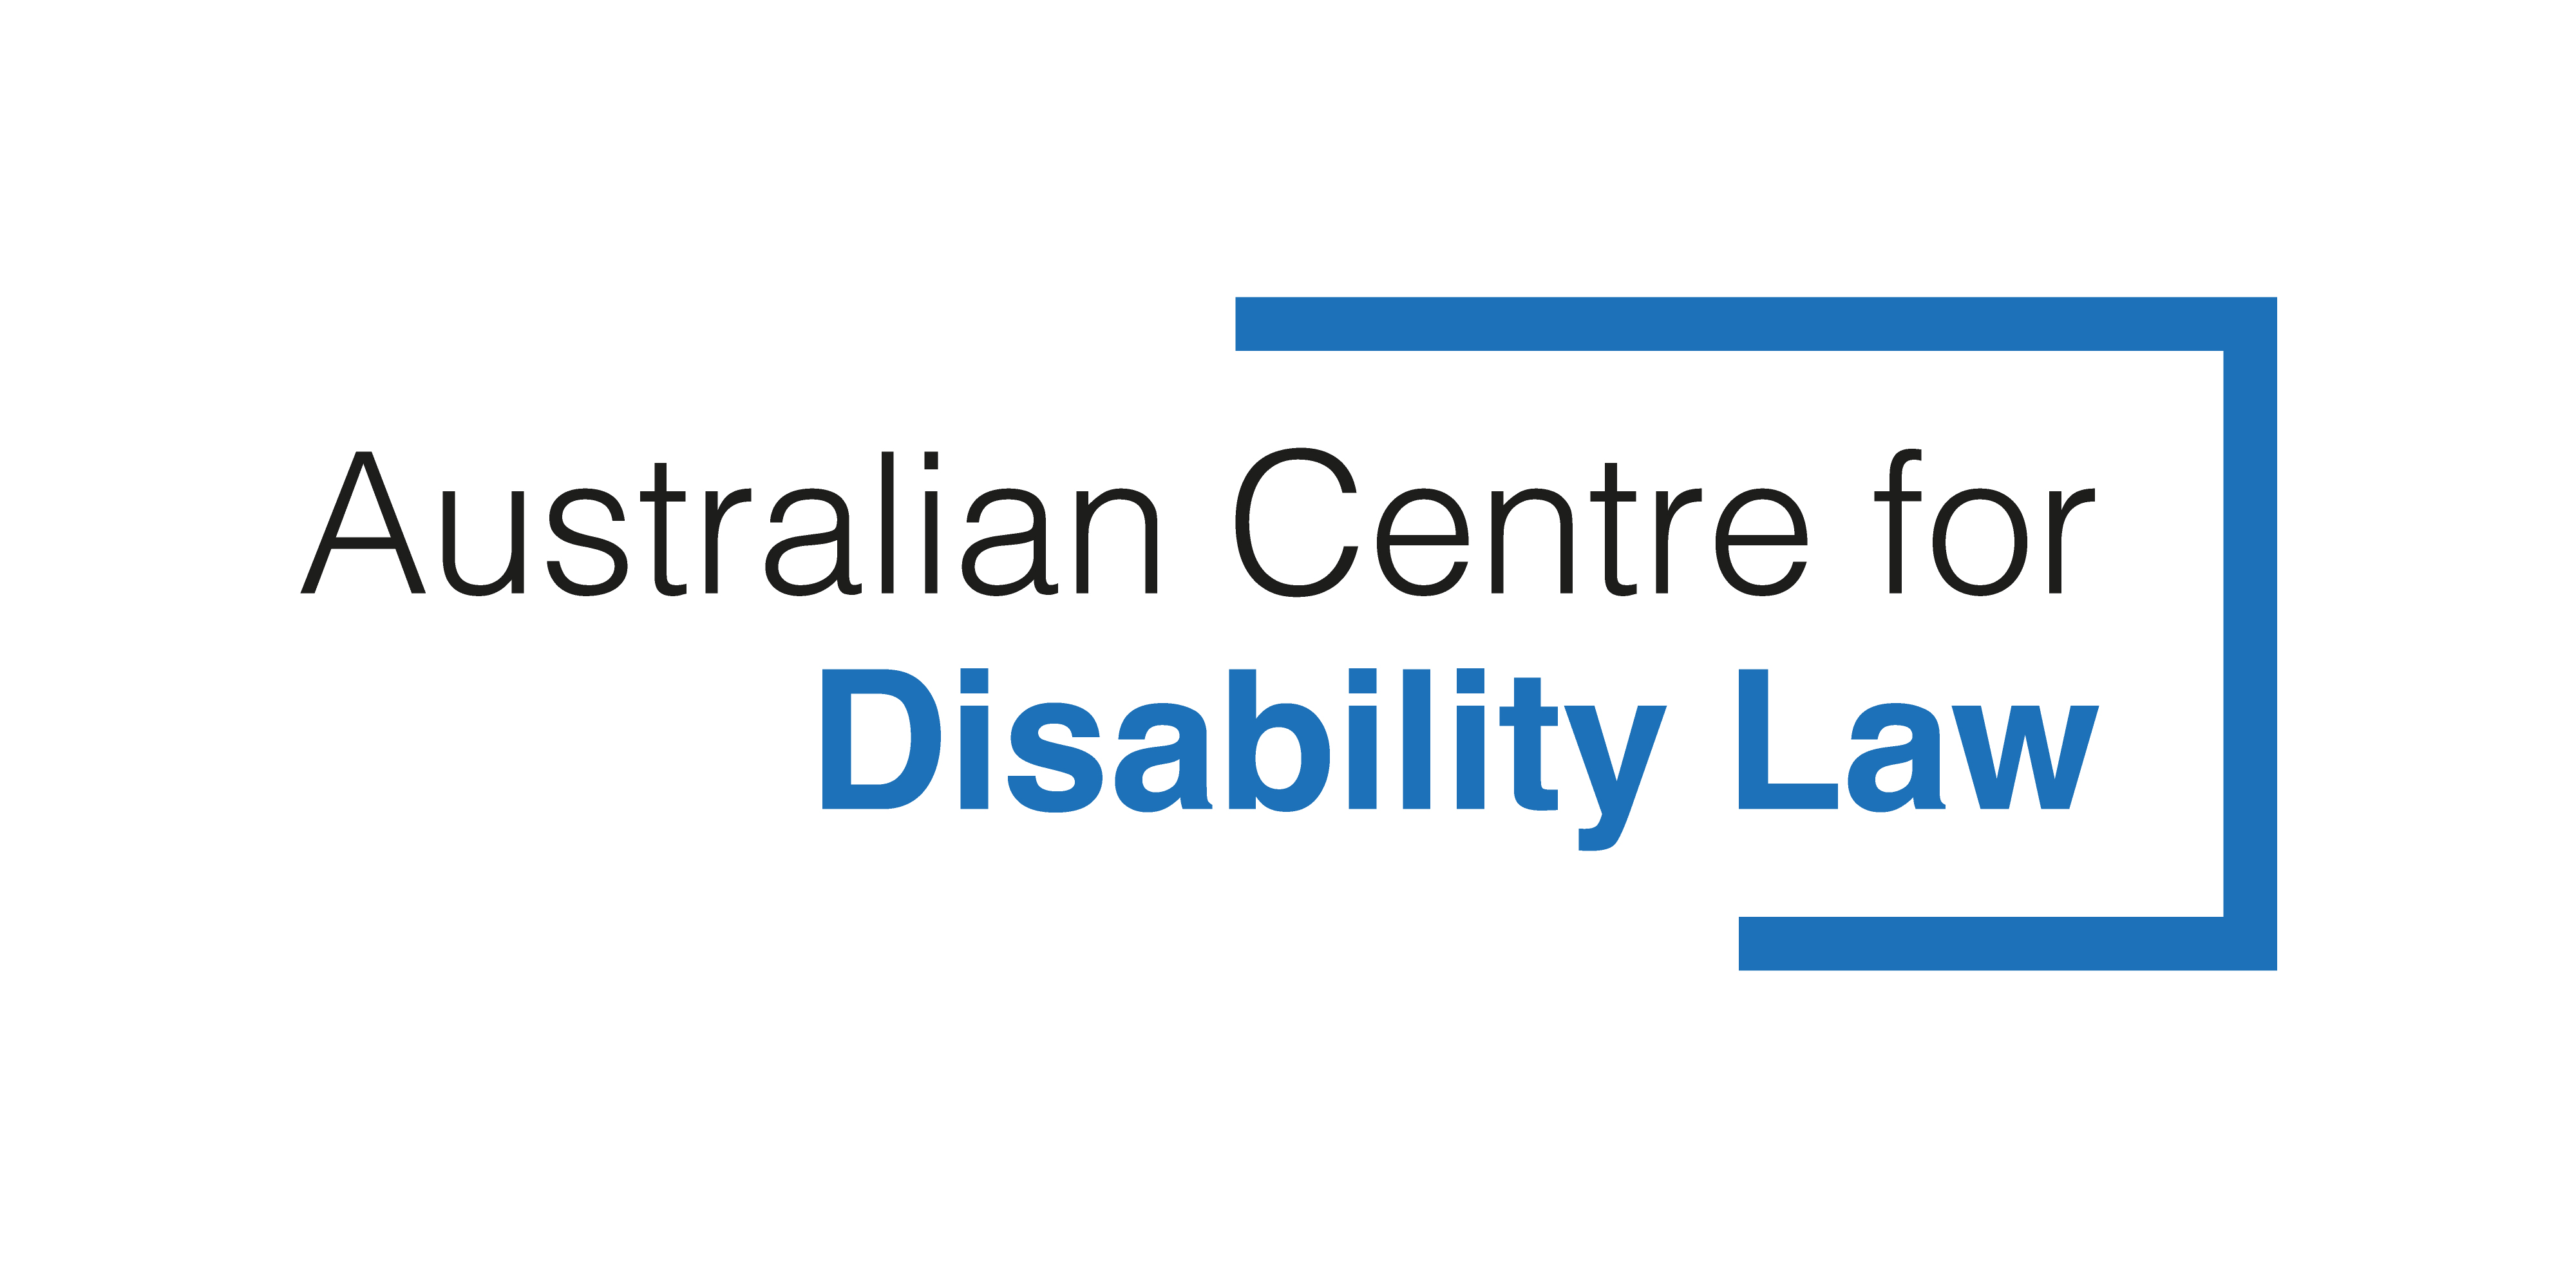  Australian Centre for Disability Law logo